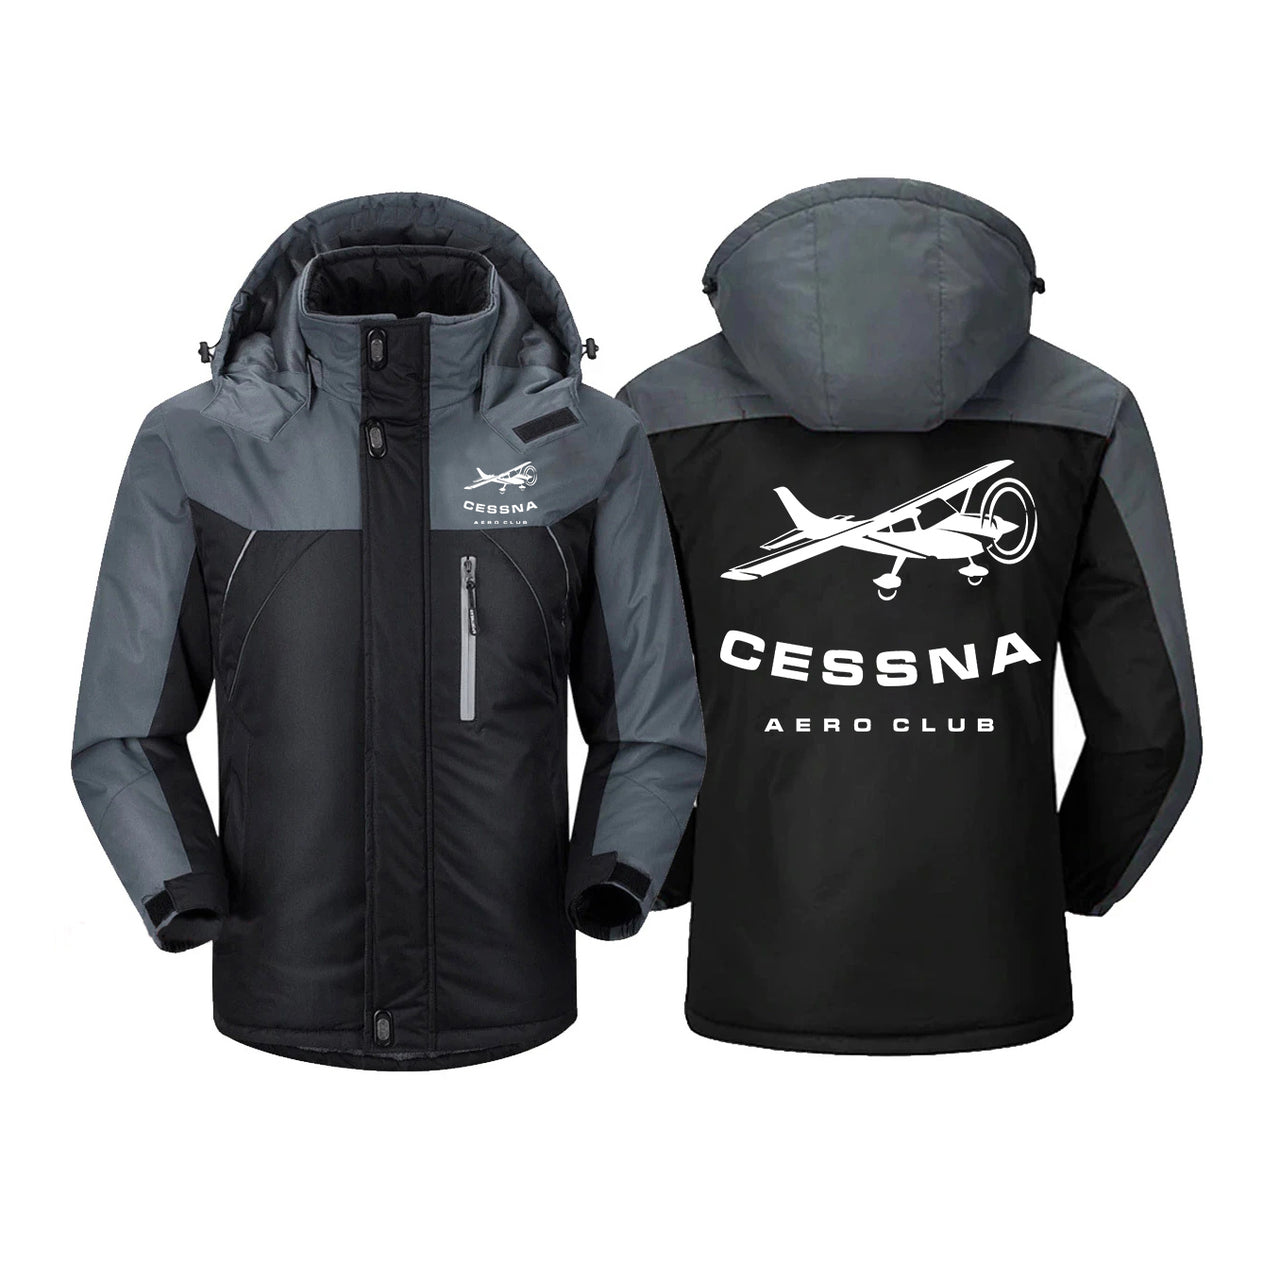 Cessna Aeroclub Designed Thick Winter Jackets